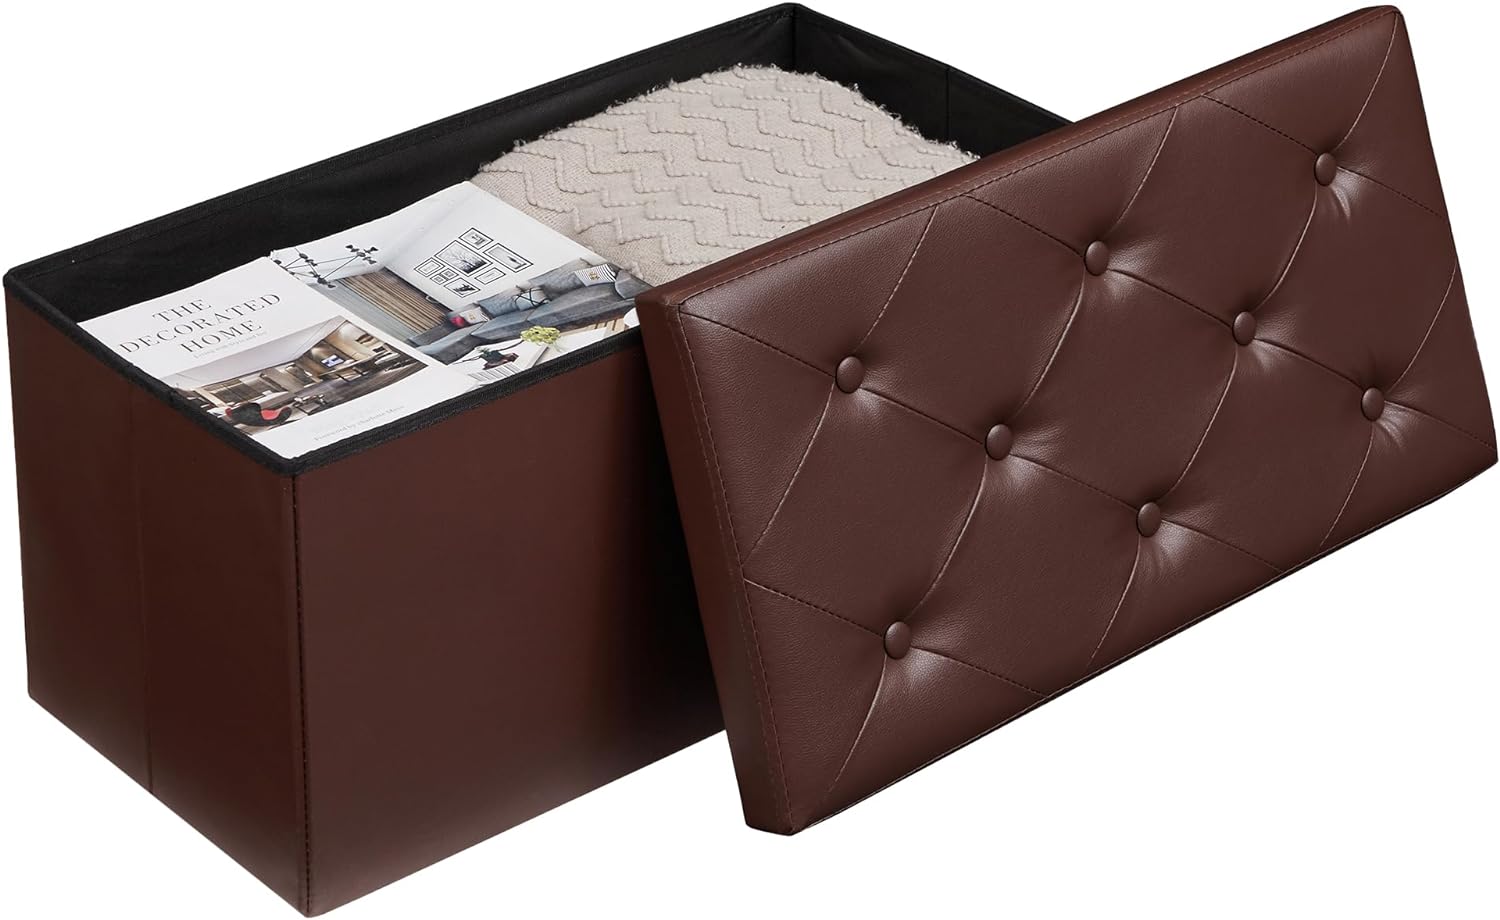 VECELO Storage Ottoman Bench End of Bed 43'' Footstool Footrest Stool Shoestool for Bedroom Hallway Entraway Living Room